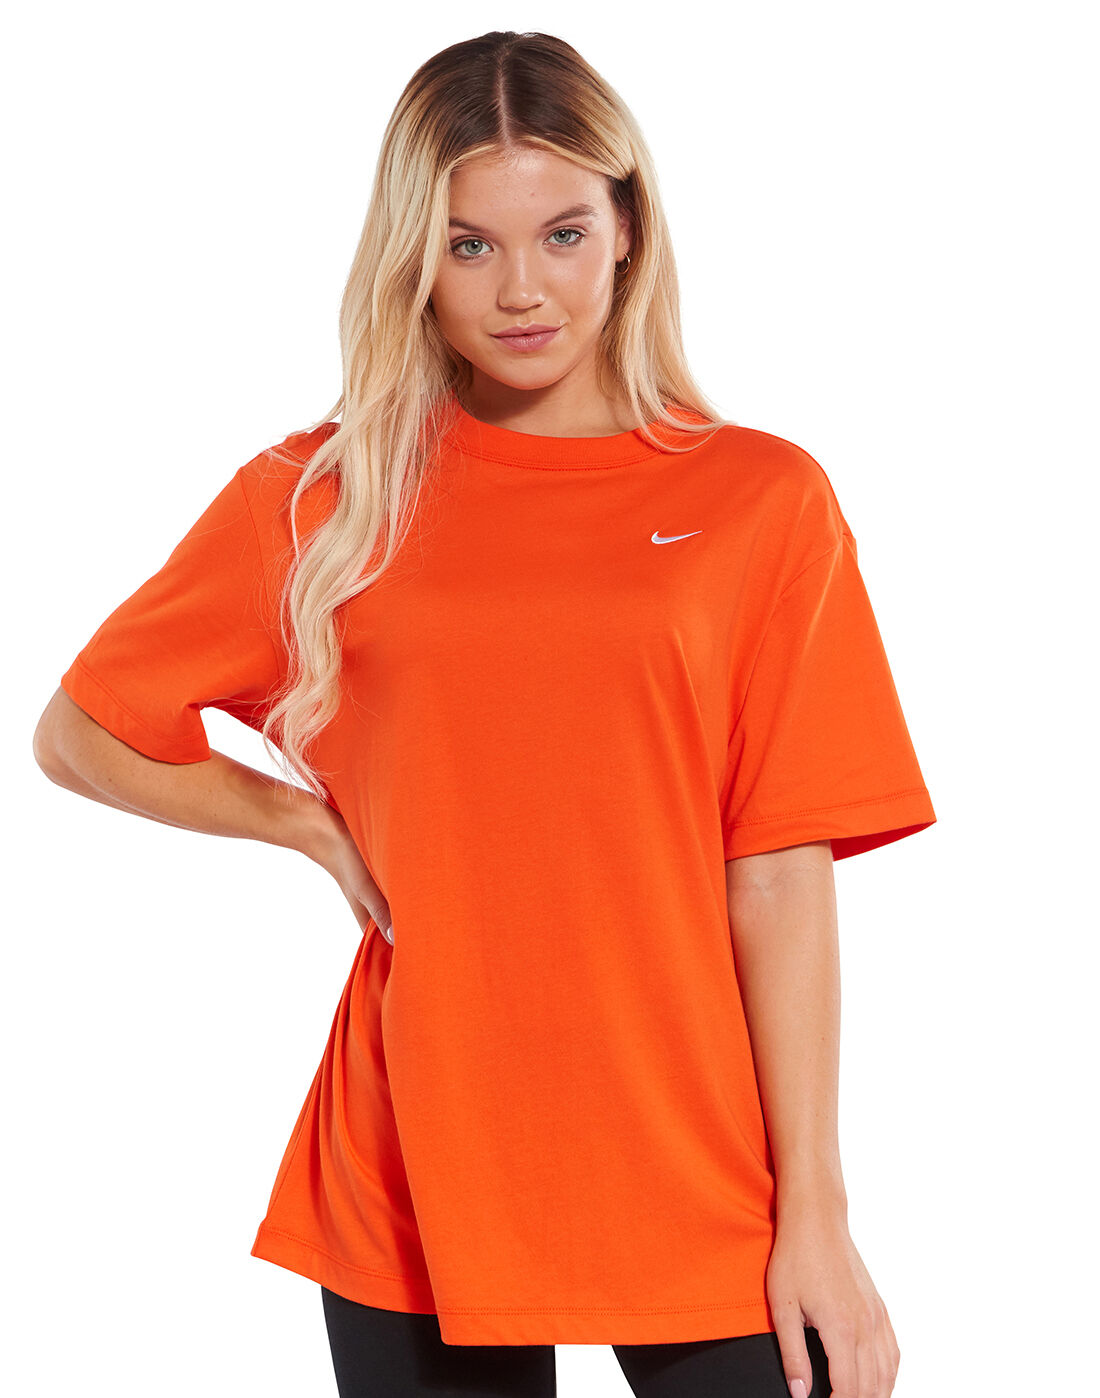 orange womens nike shirt